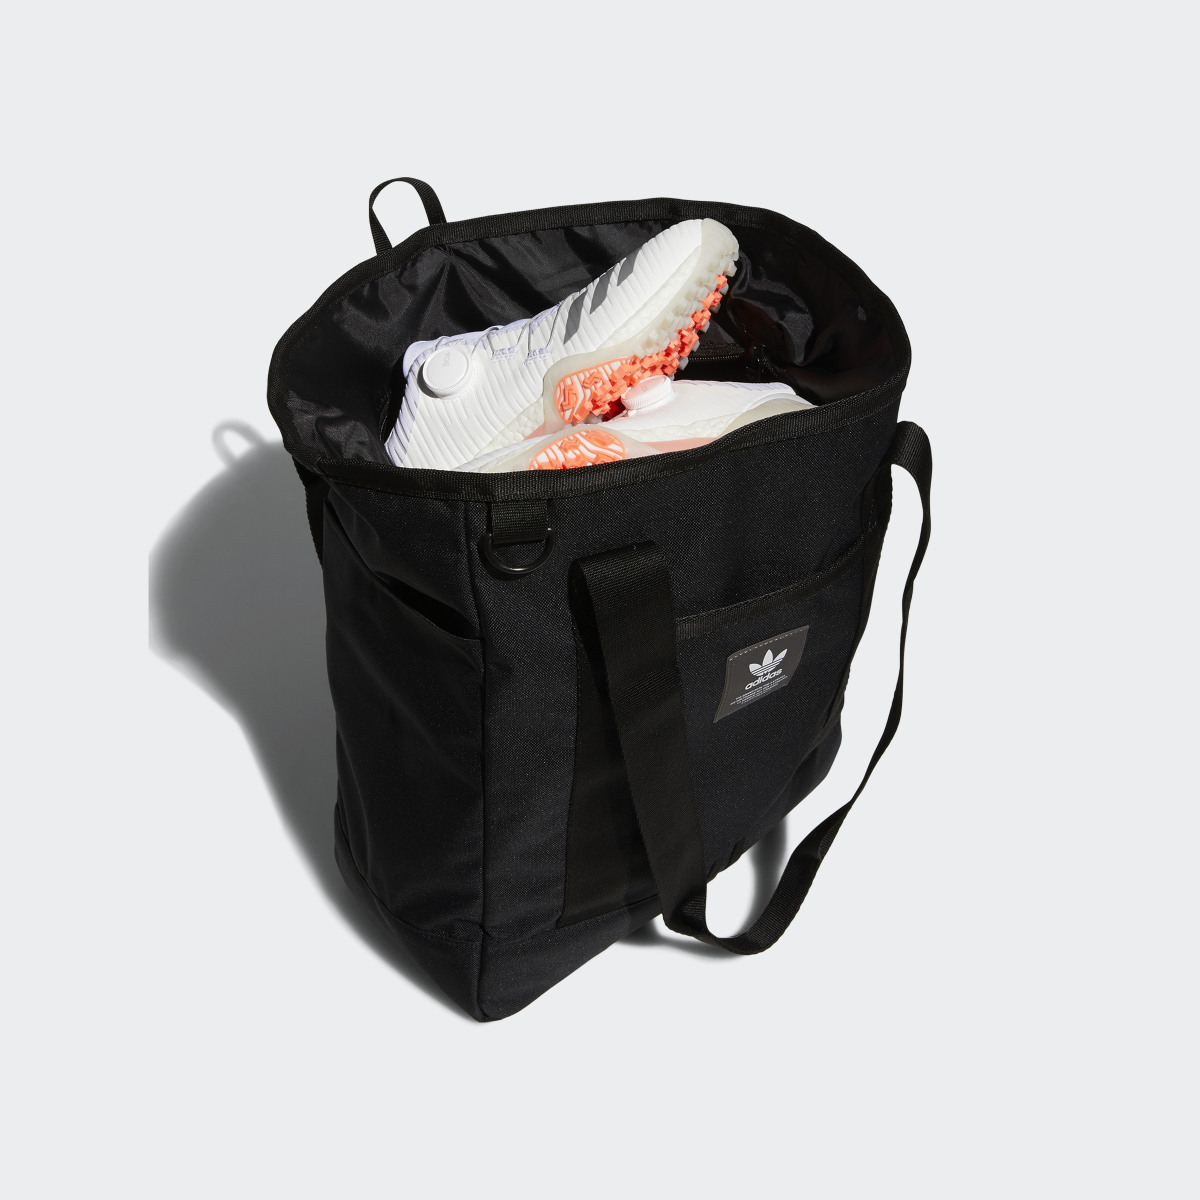 Adidas Sport Tote Bag. 5